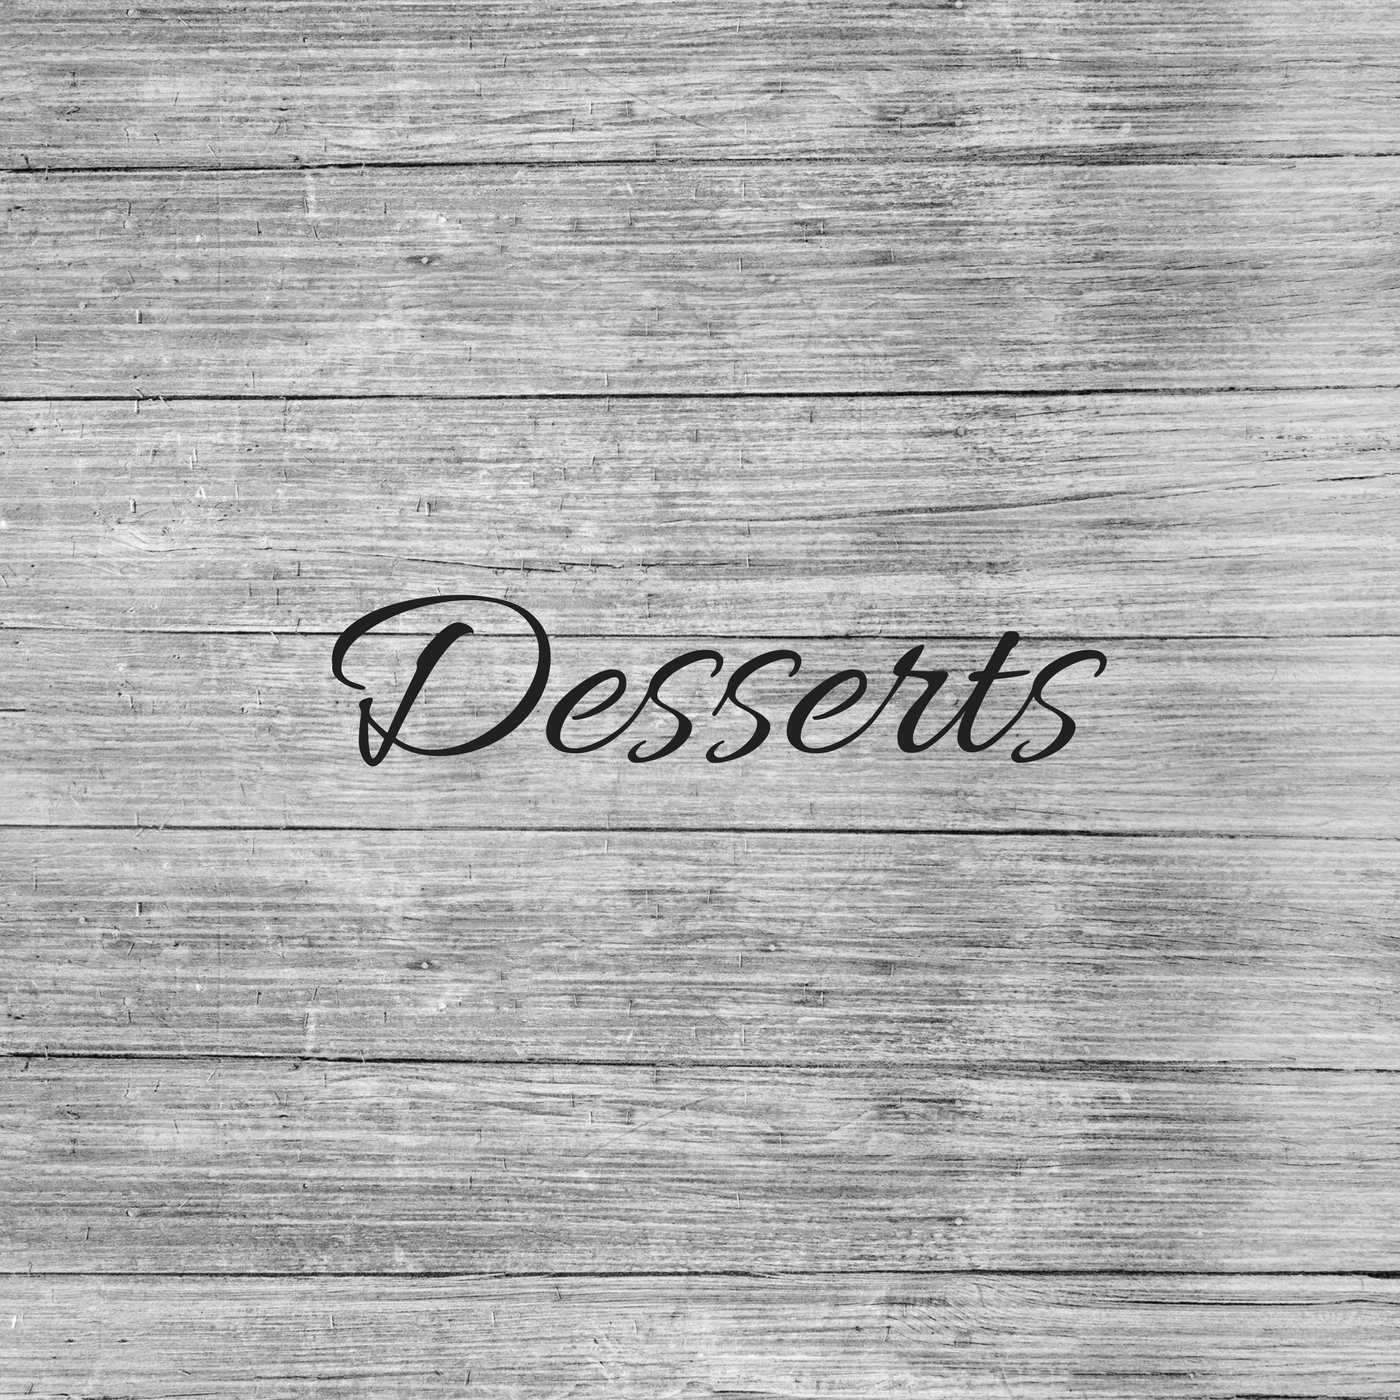 Desserts grey.jpg